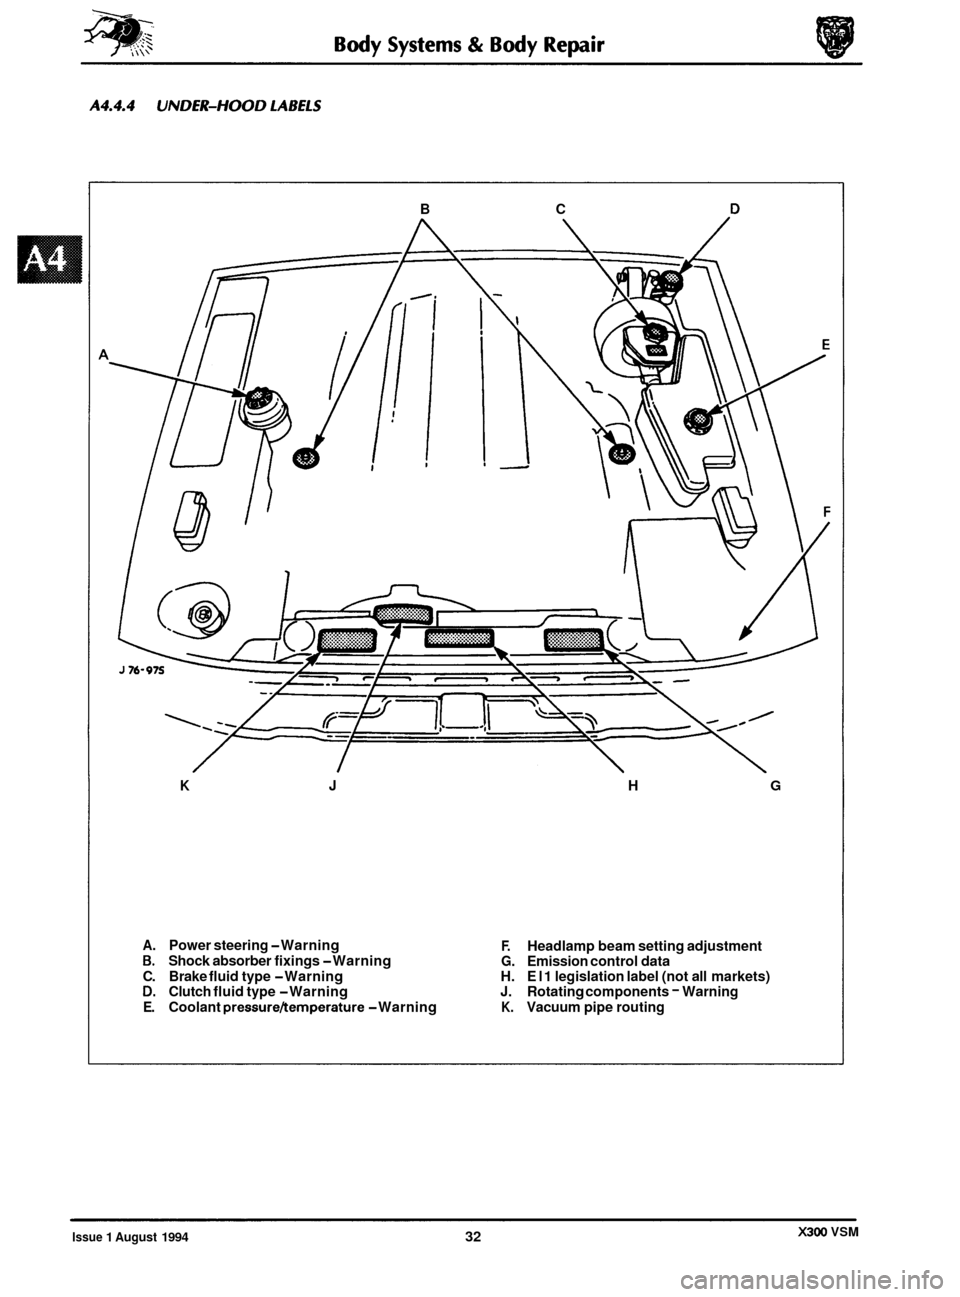 JAGUAR XJ6 1994 2.G Service Manual B  C D 
K J H G 
A. Power steering -Warning F. Headlamp beam setting adjustment B. Shock absorber  fixings -Warning G. Emission control data 
C.  Brake  fluid type -Warning  H. El 1 legislation label 